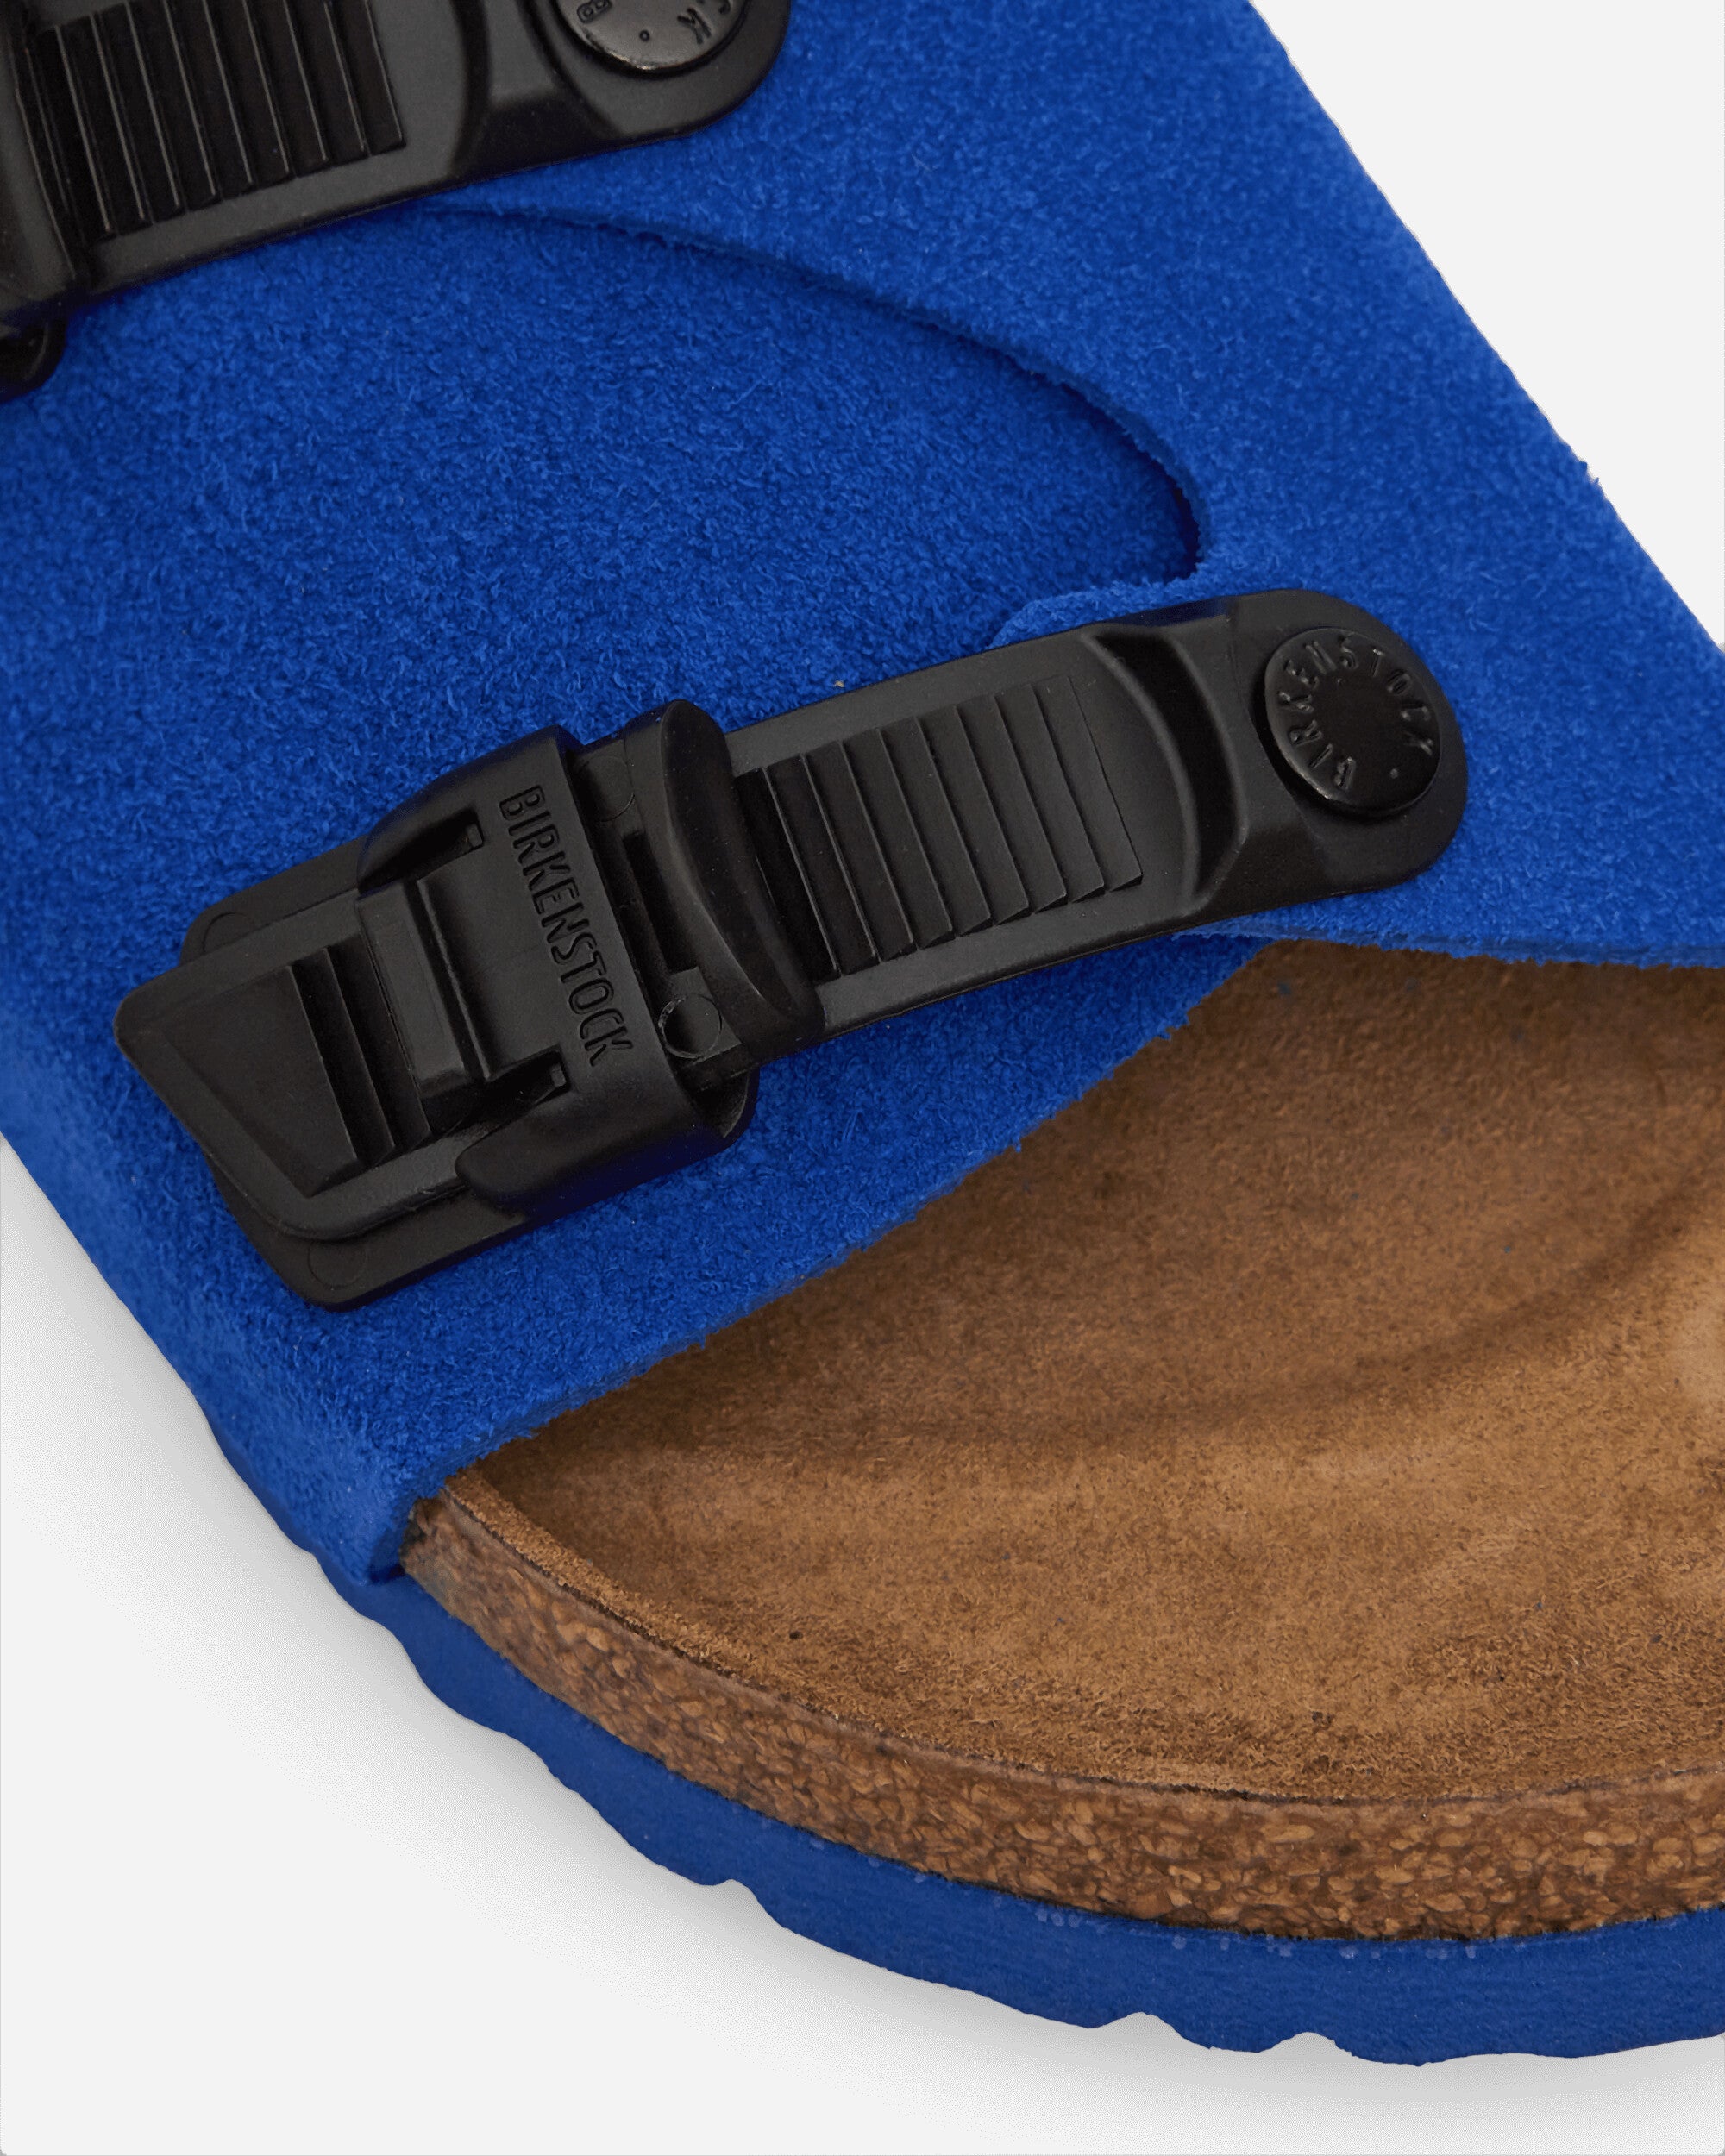 Birkenstock Zürich Tech Ultra Blue Sandals and Slides Sandals and Mules 1026816 ULTRABLUE